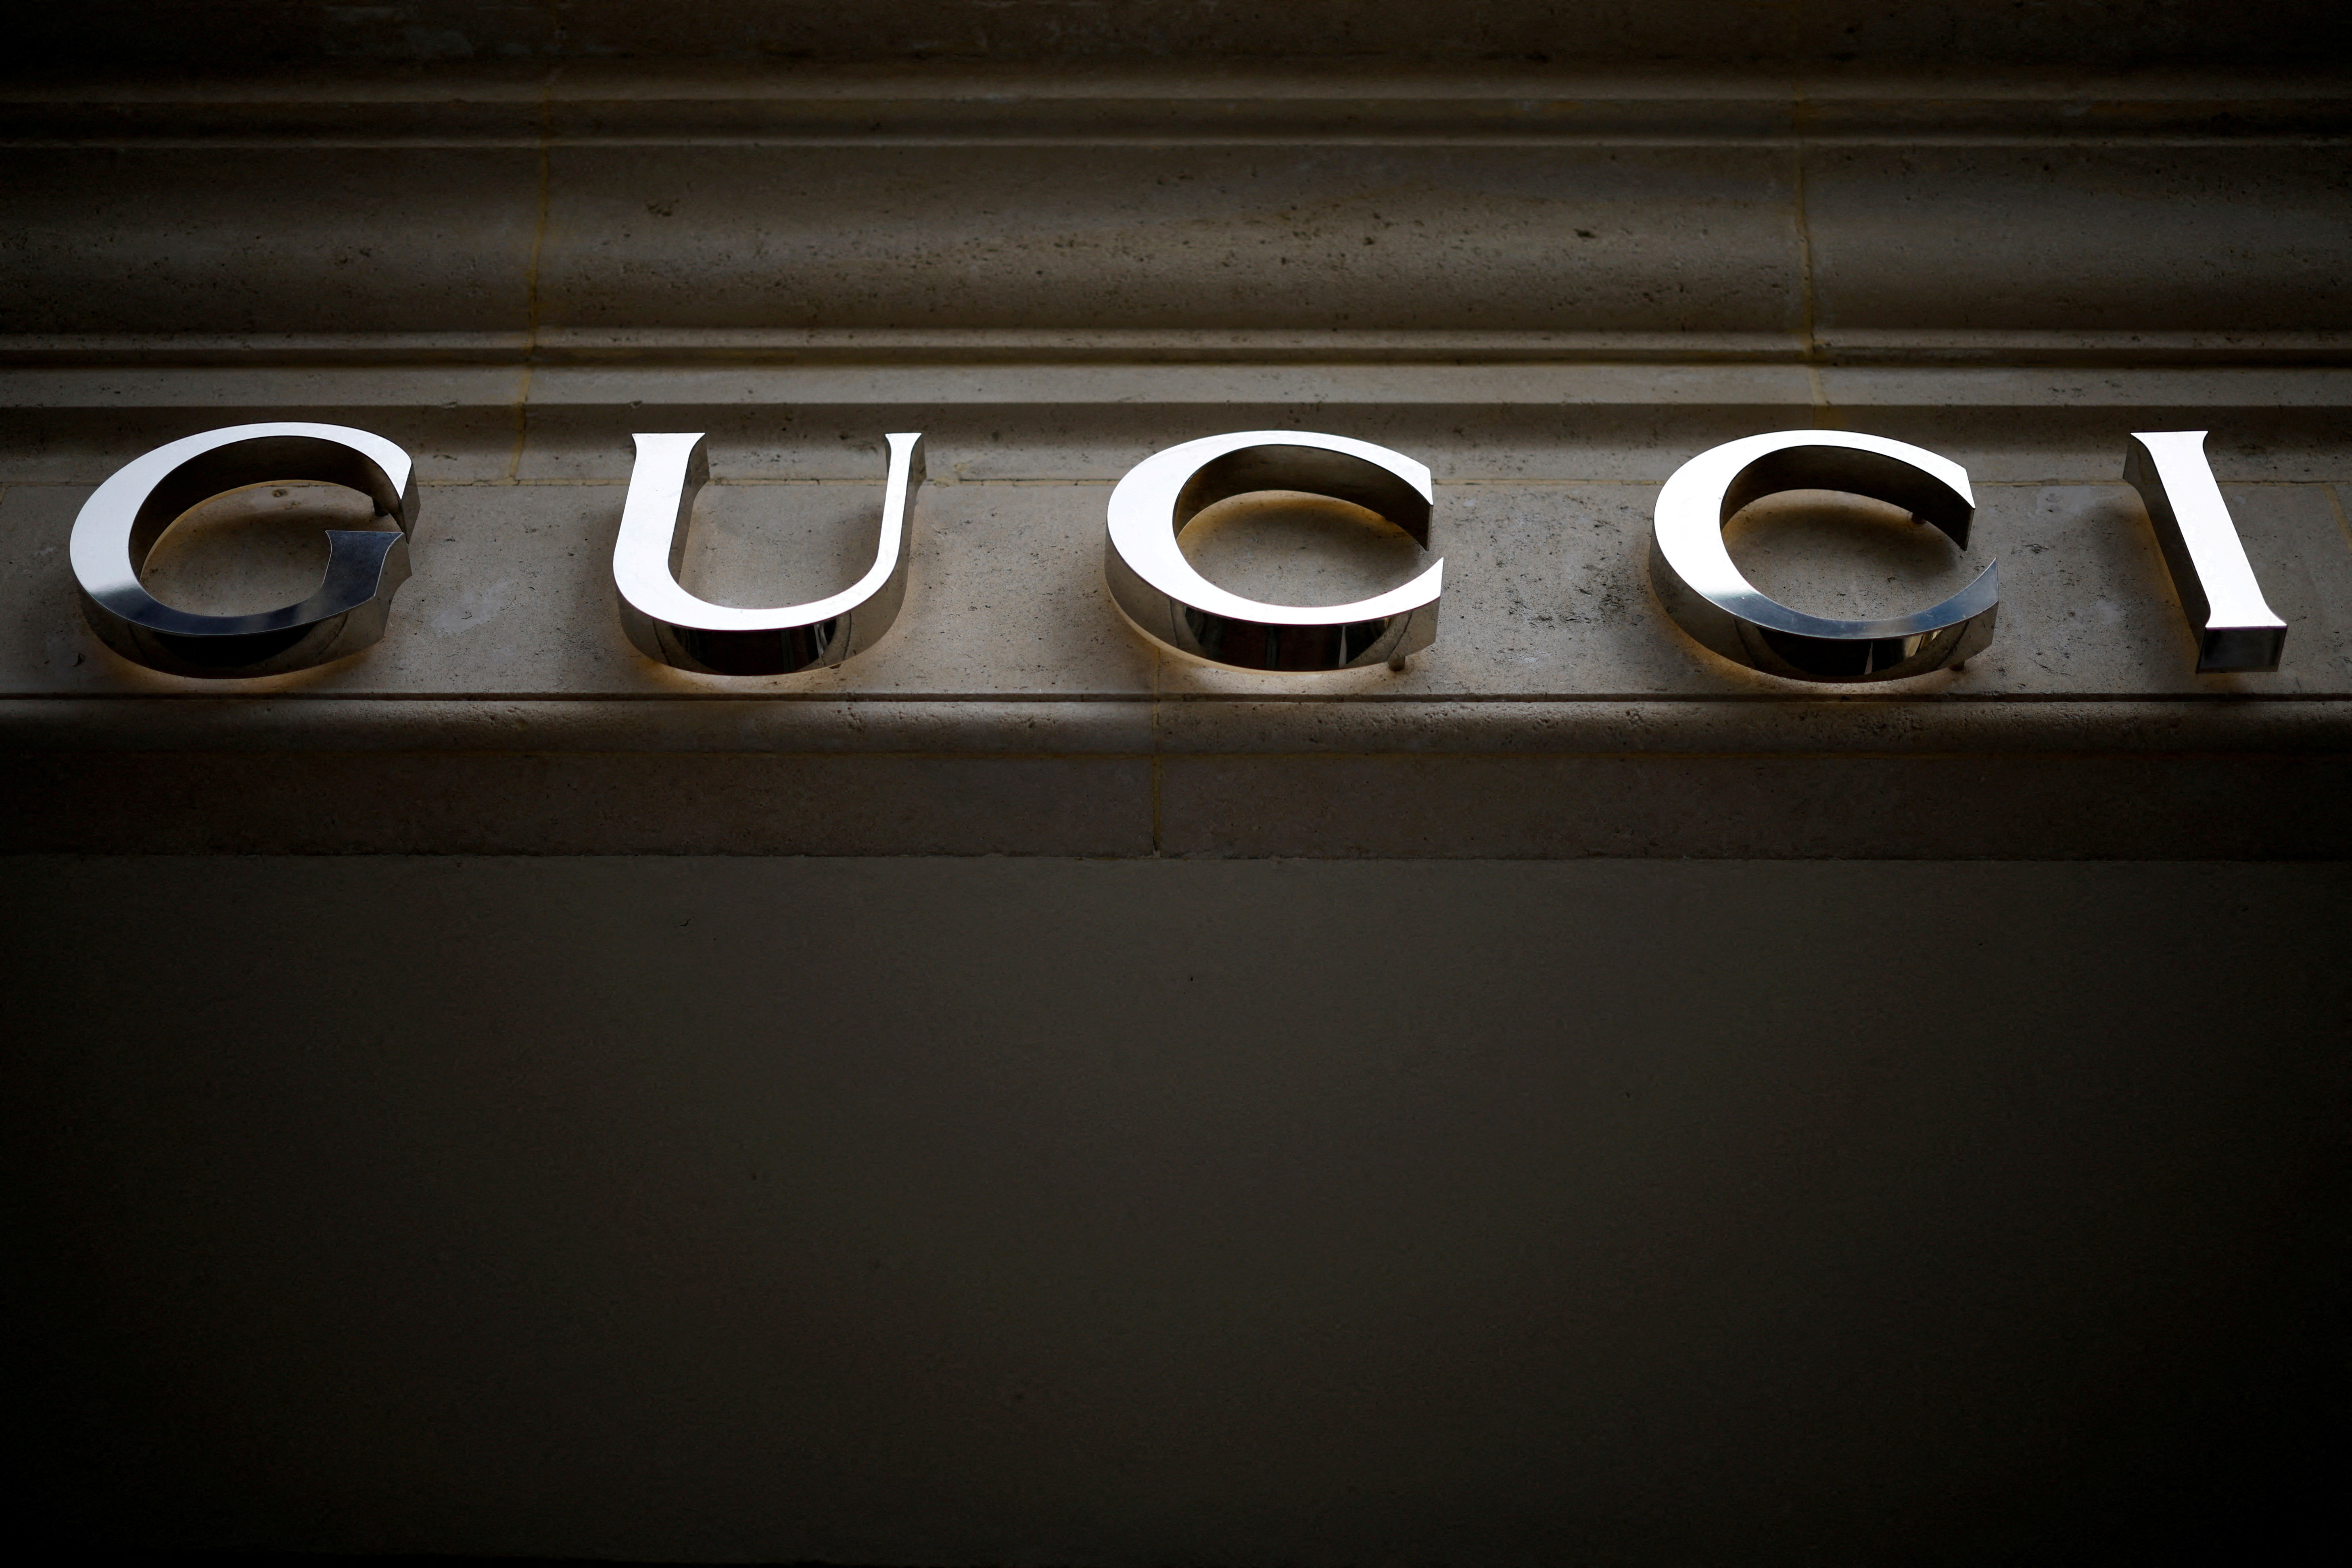 A Gucci logo is seen outside a shop in Paris